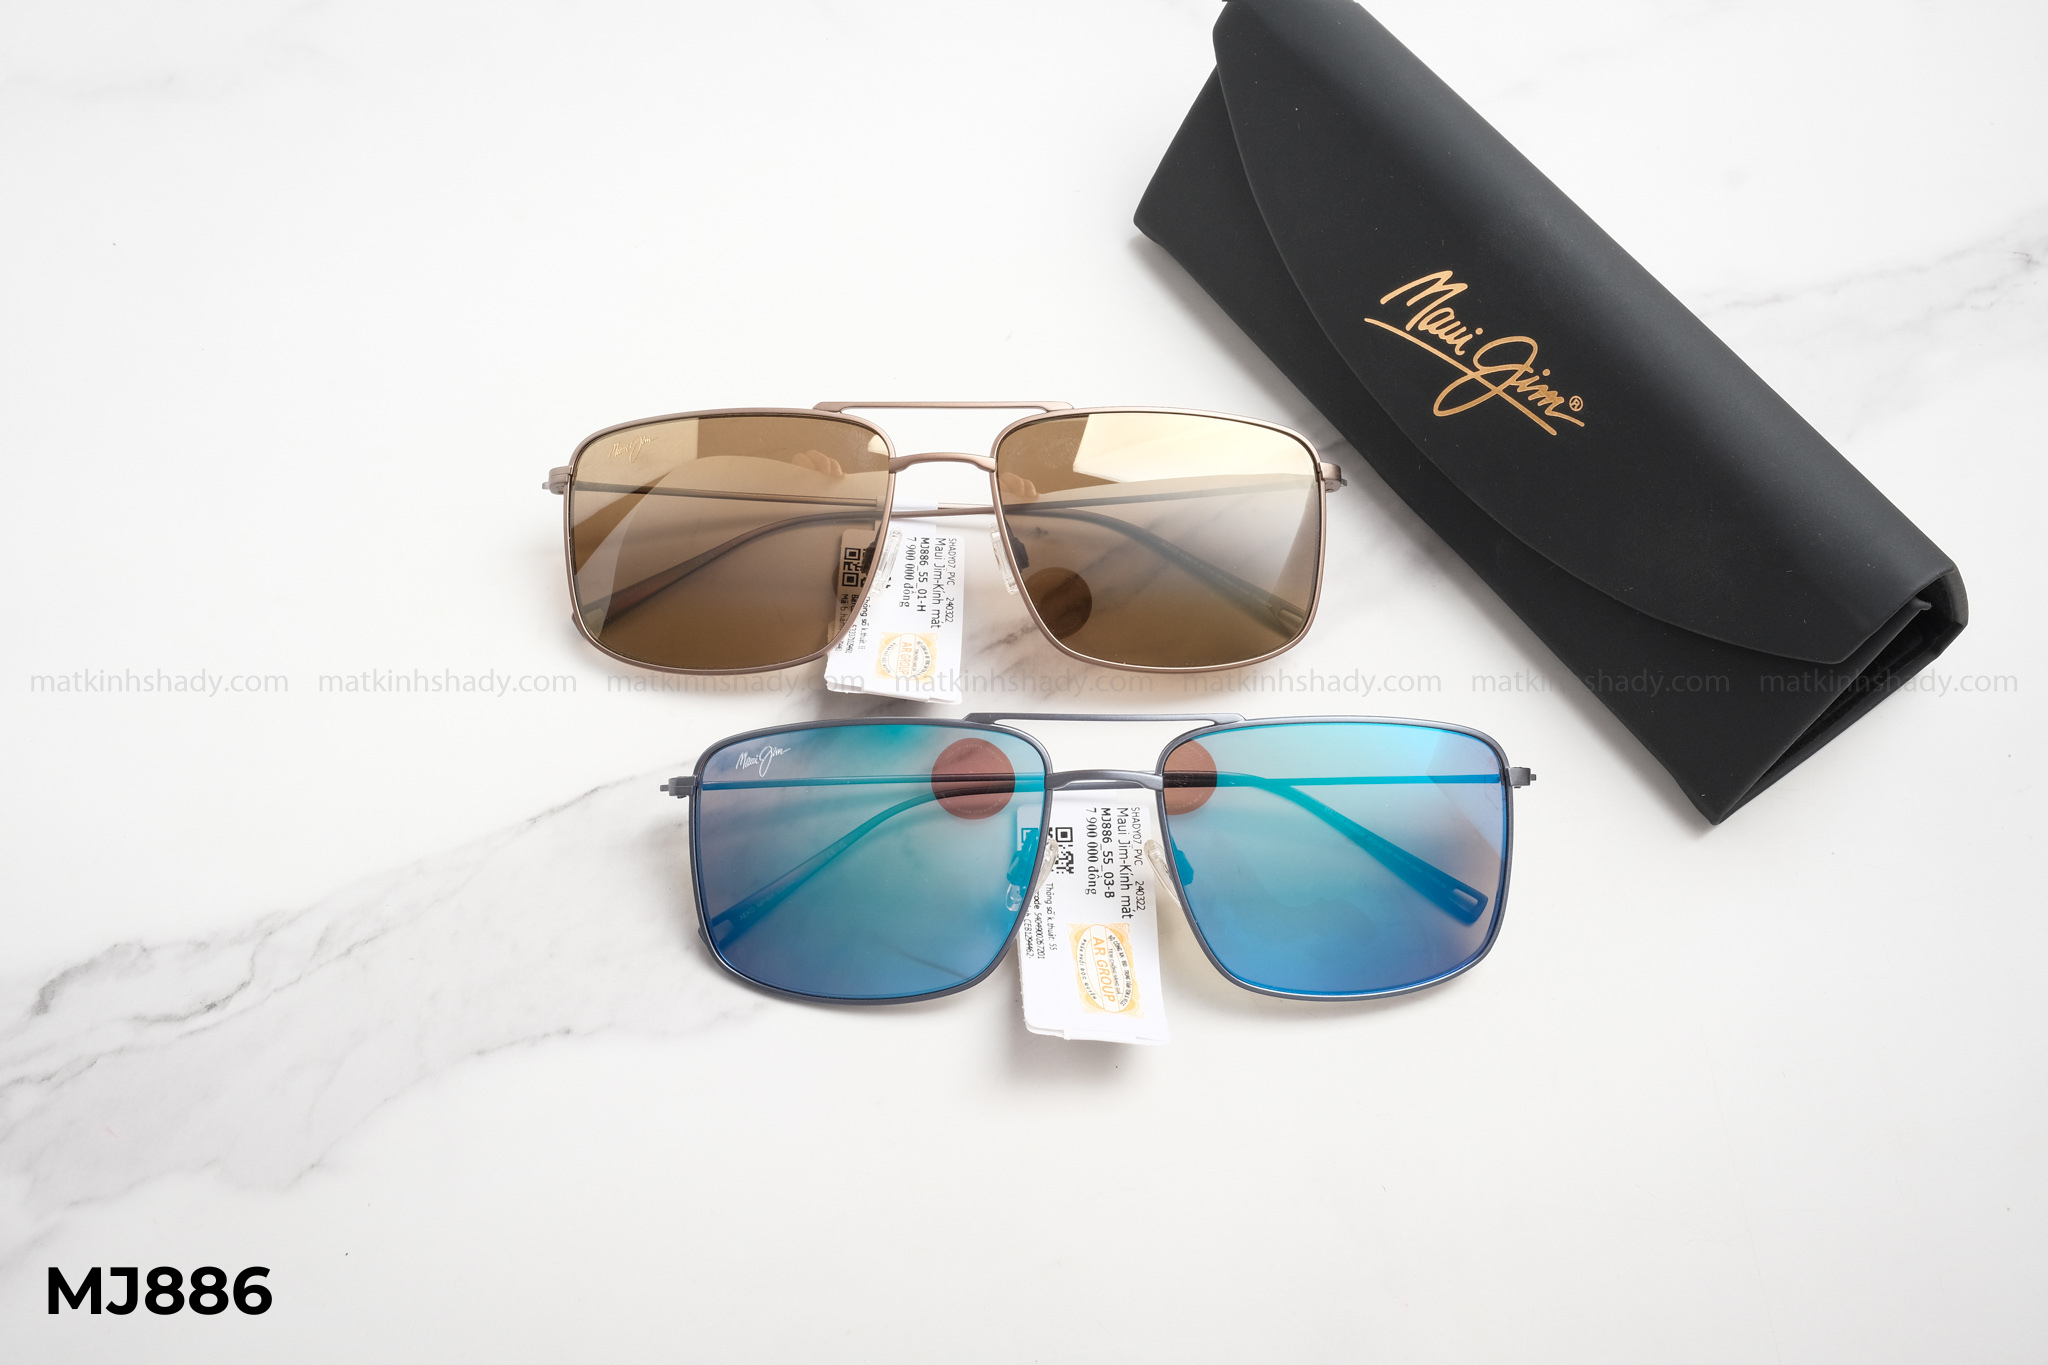  Maui Jim Eyewear - Sunglasses - MJ886 